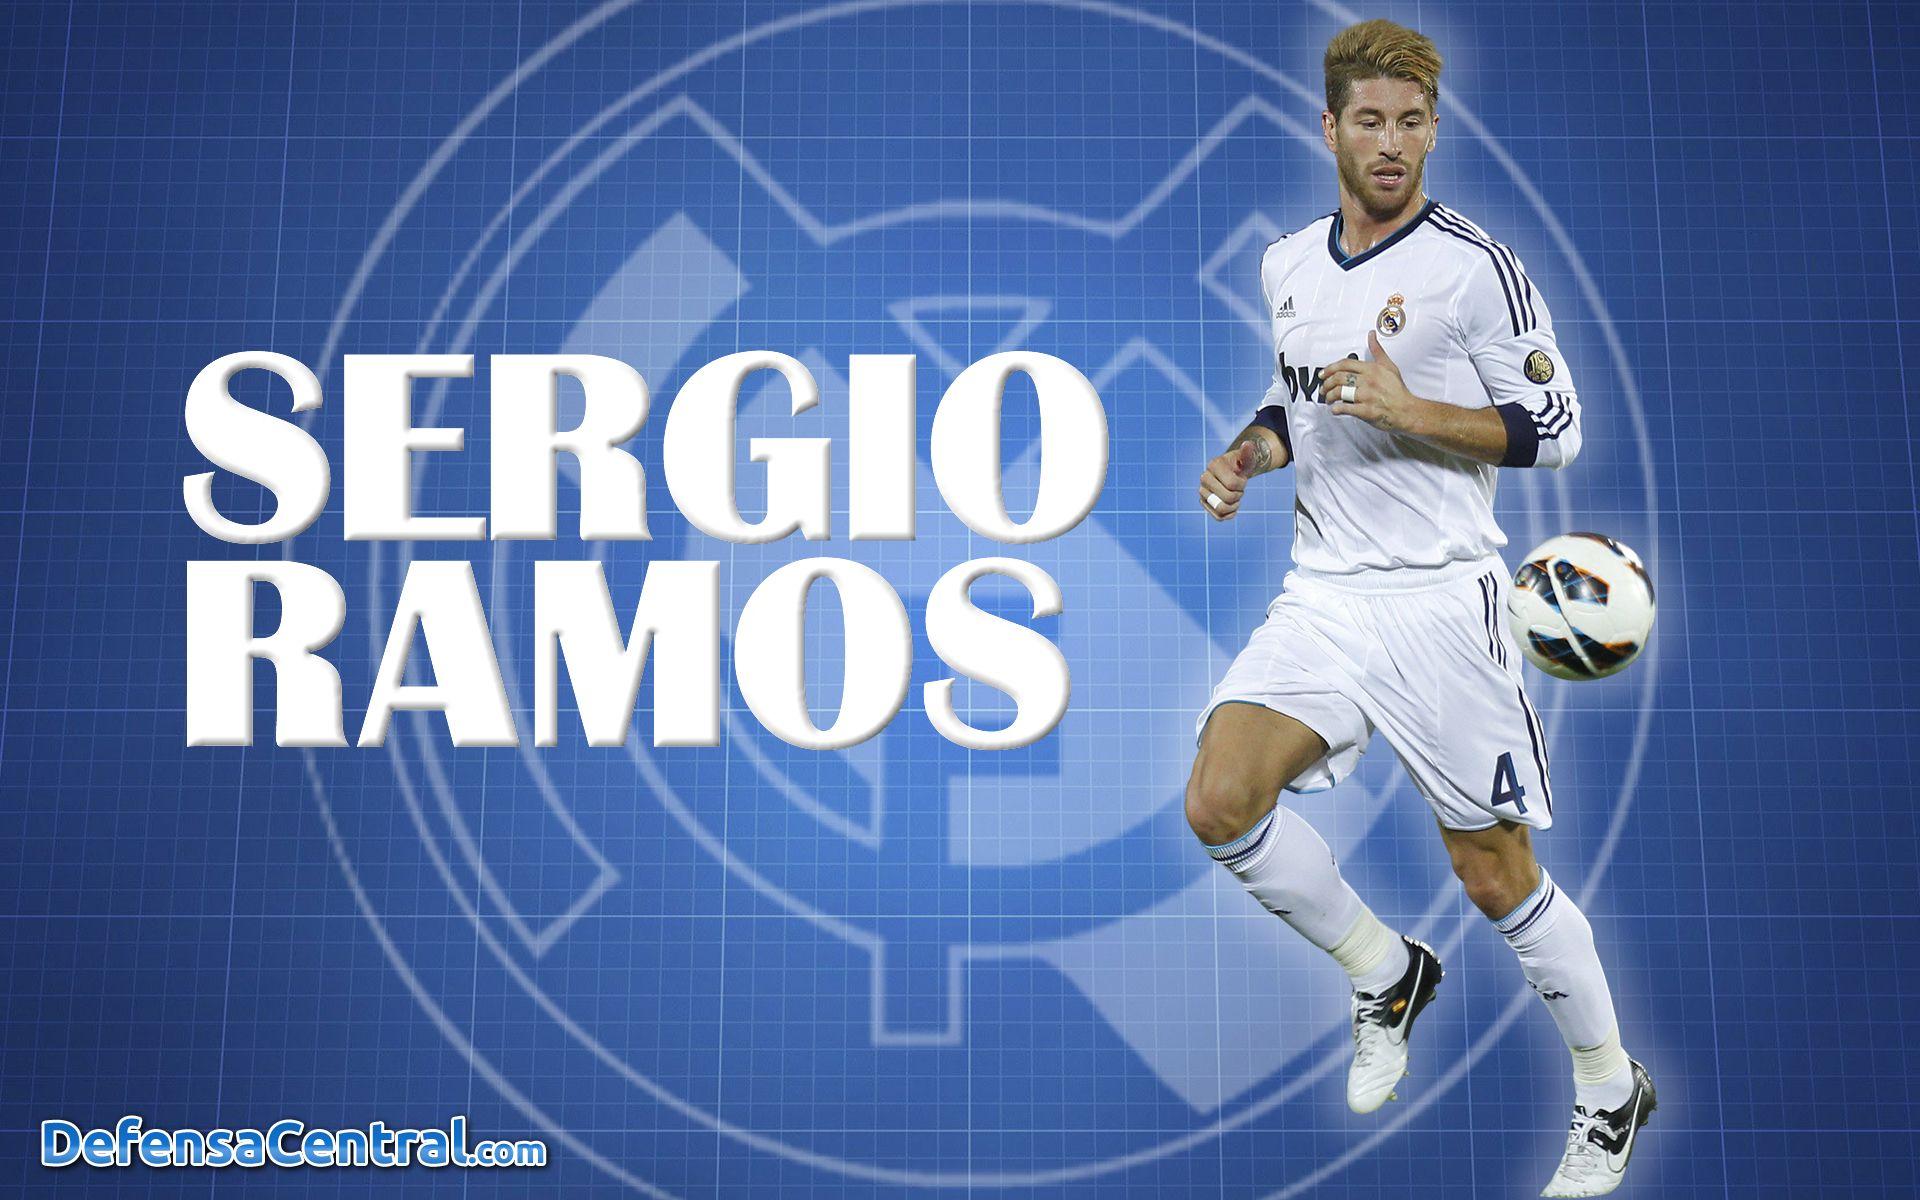 Sergio Ramos of Real Madrid wallpaper and image